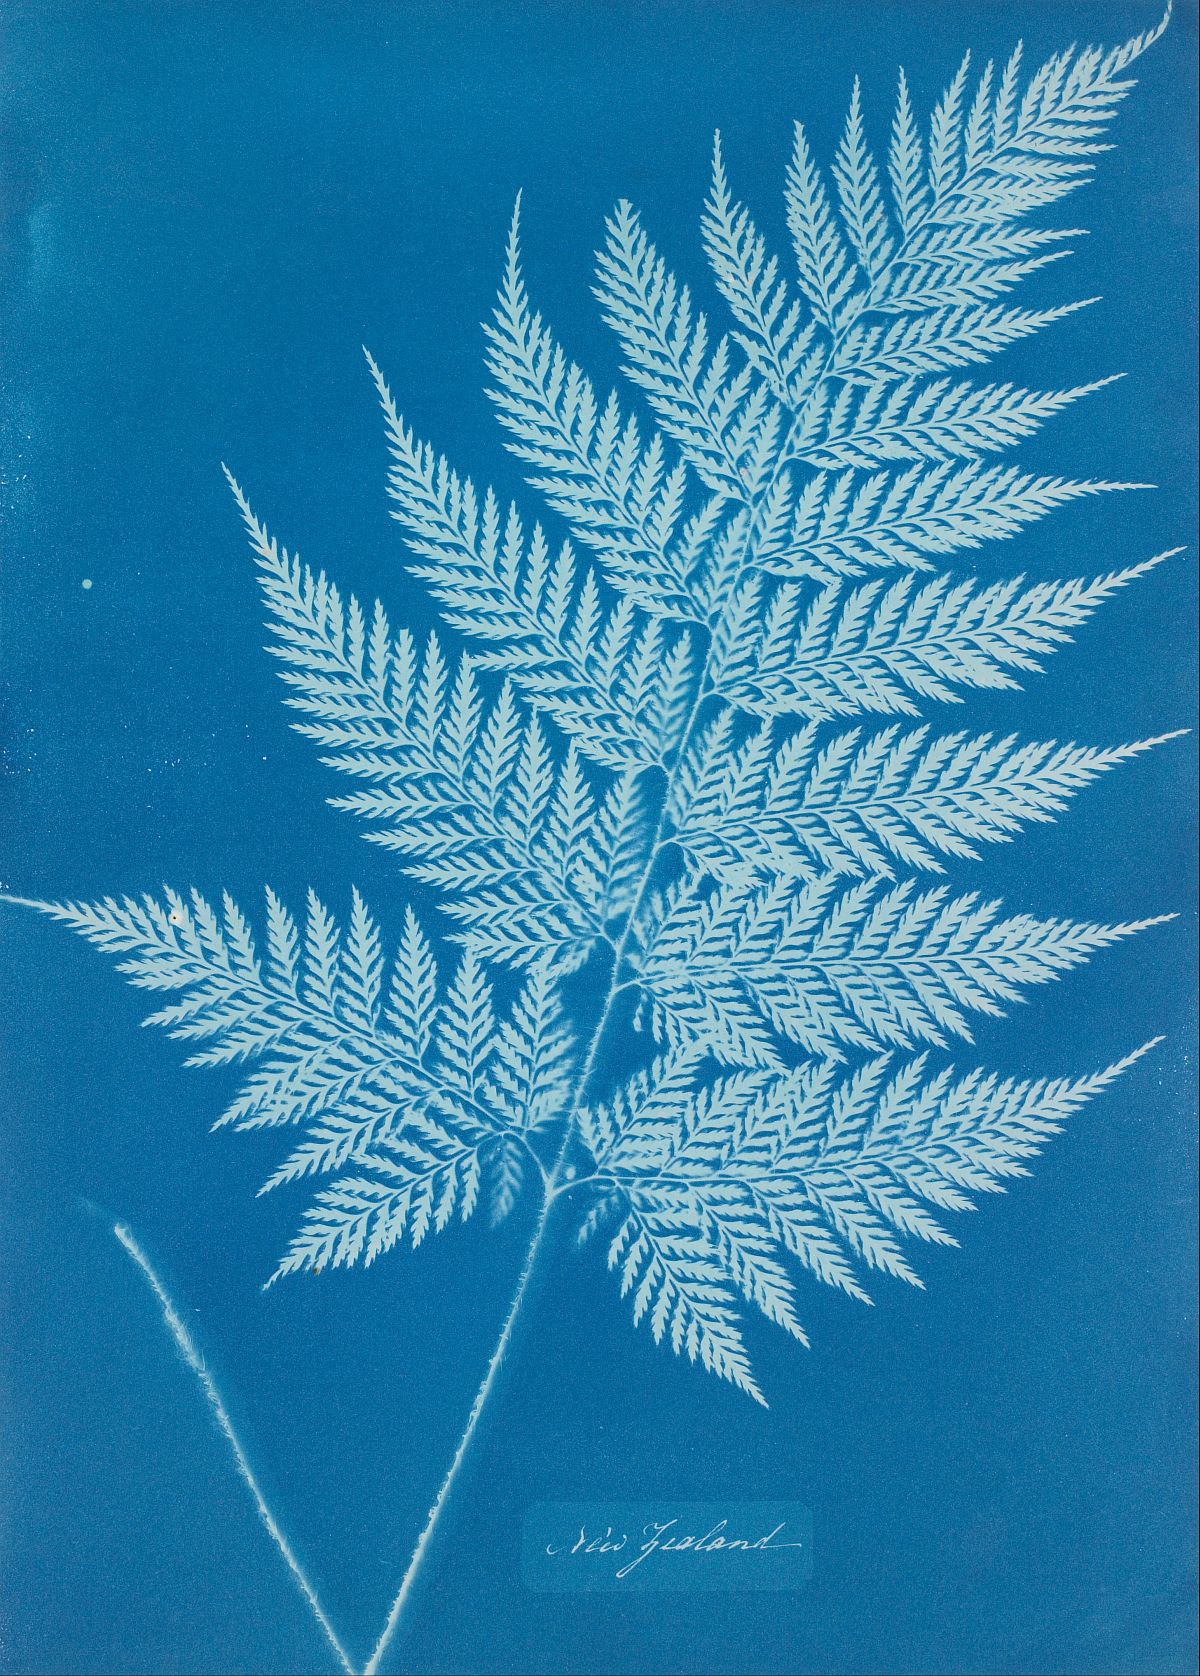 A cyanotype photogram made by Anna Atkins